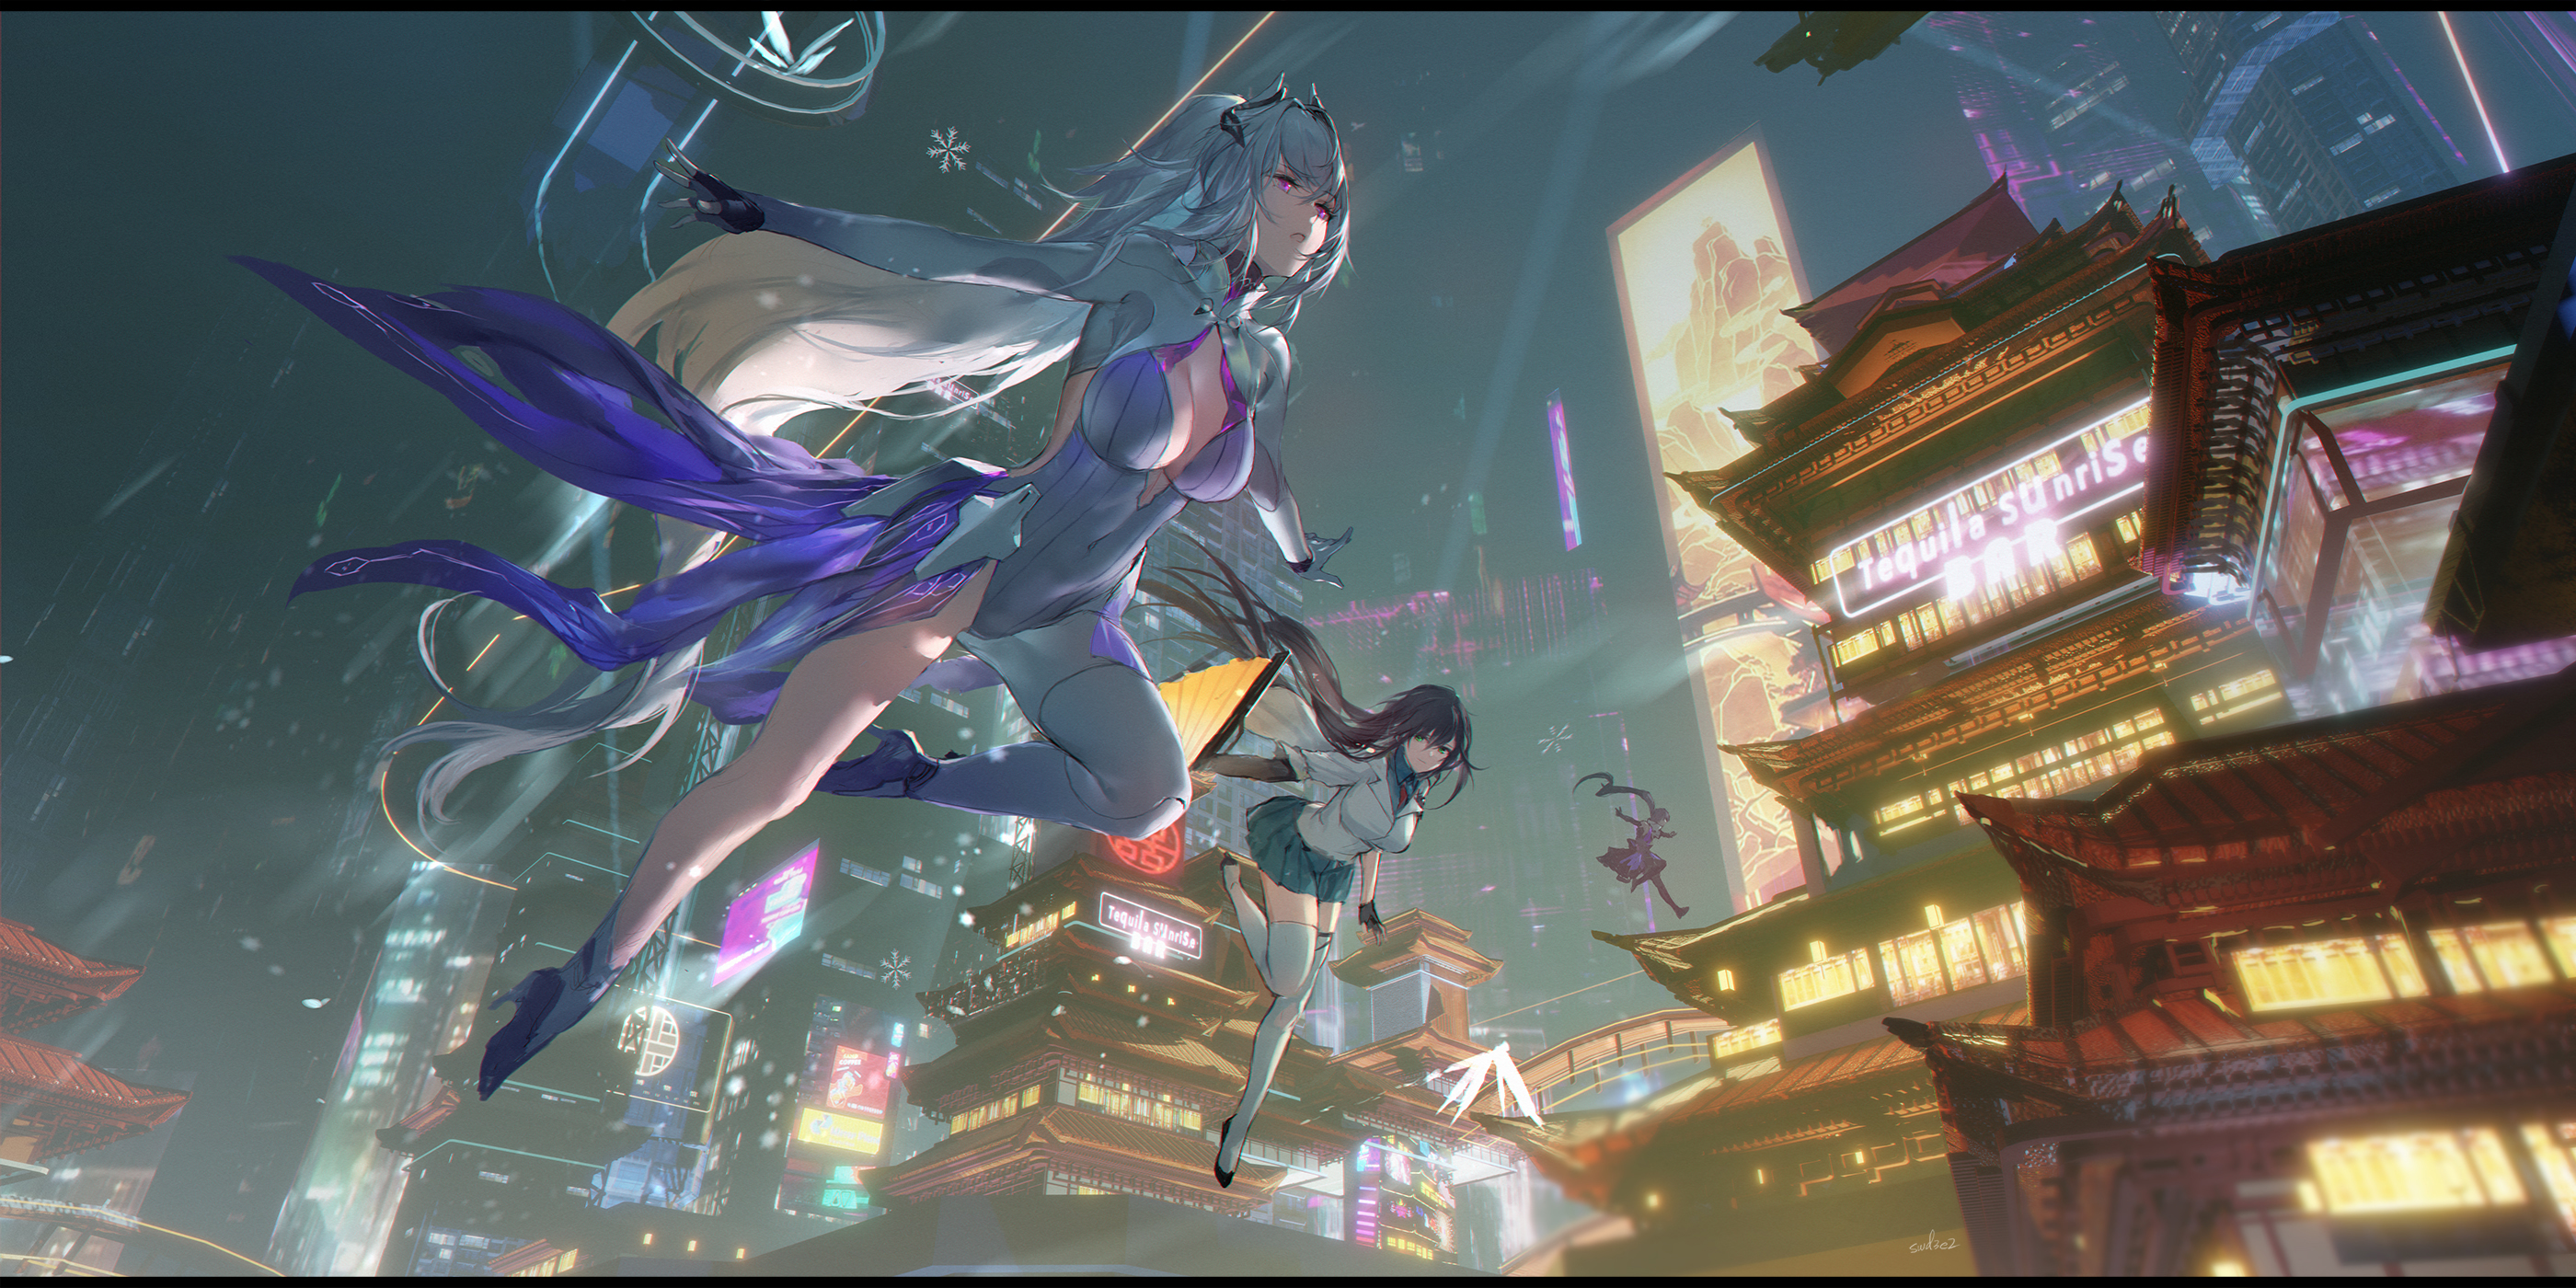 Anime 2800x1400 anime anime girls city city lights Swd3e2 cyberpunk ALYSS Tower of Fantasy two women long hair